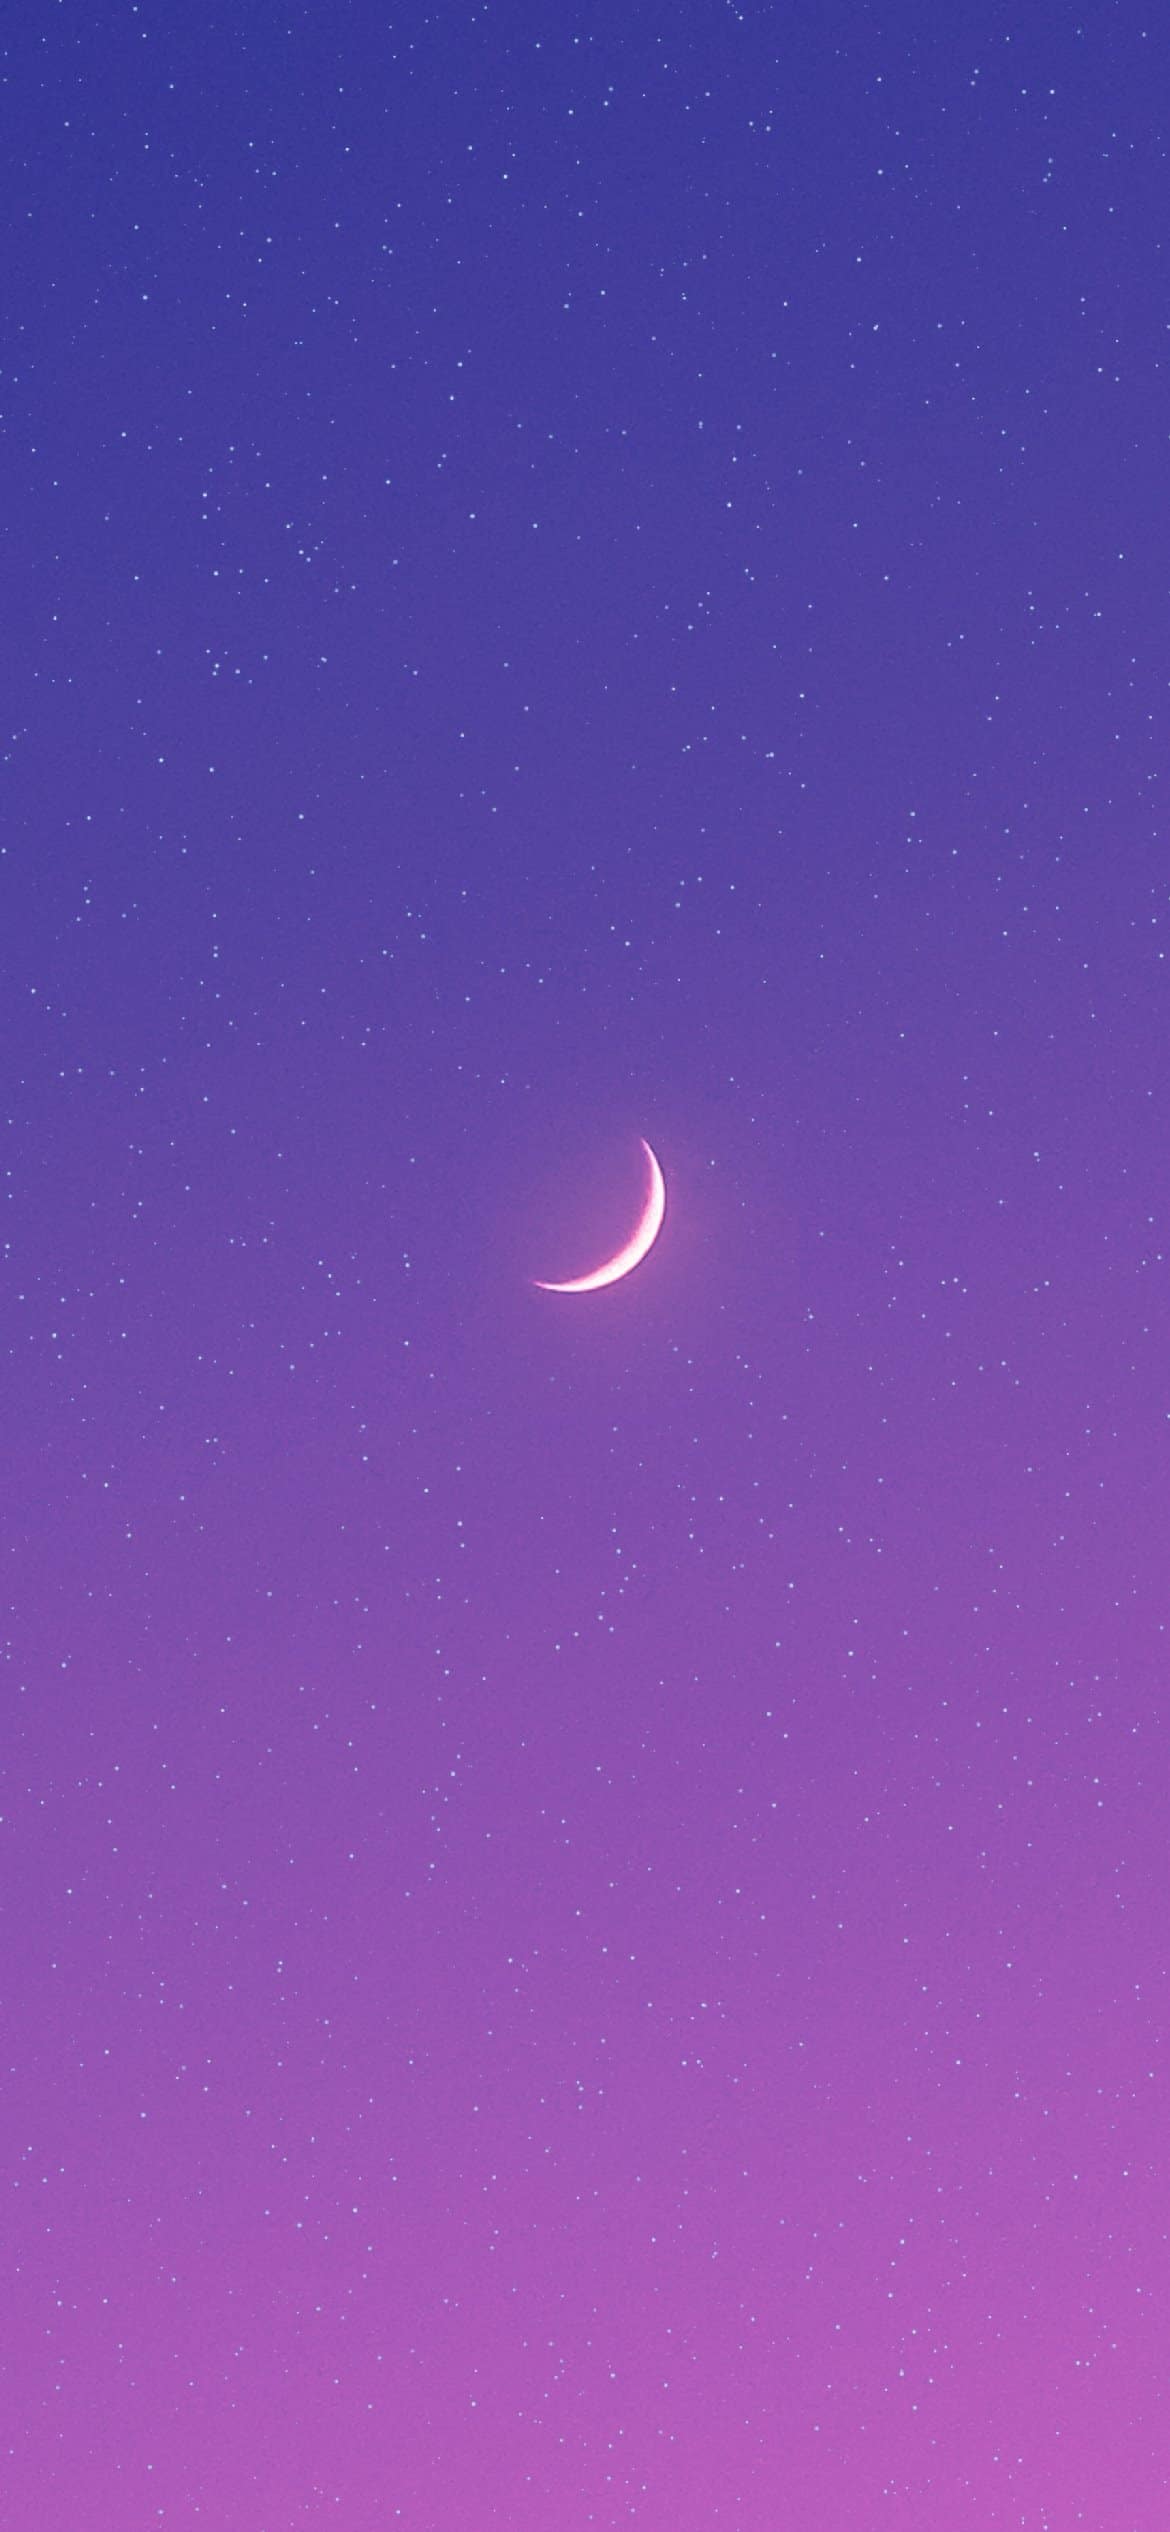 Crescent moon in the night sky wallpaper 1242x2688 - Purple